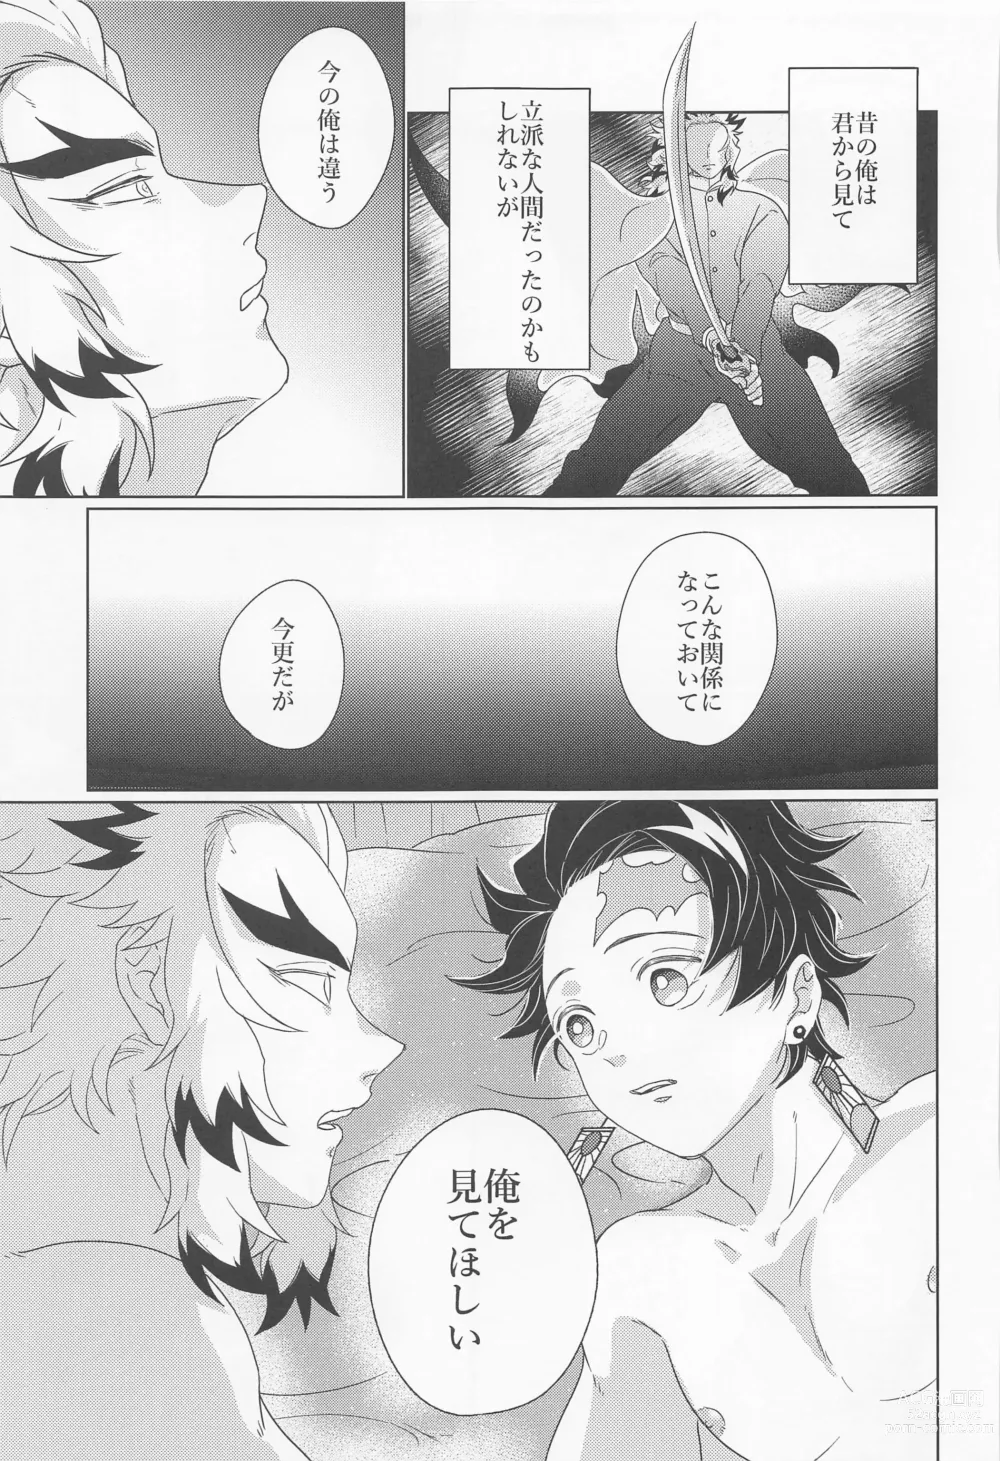 Page 56 of doujinshi Kagerou